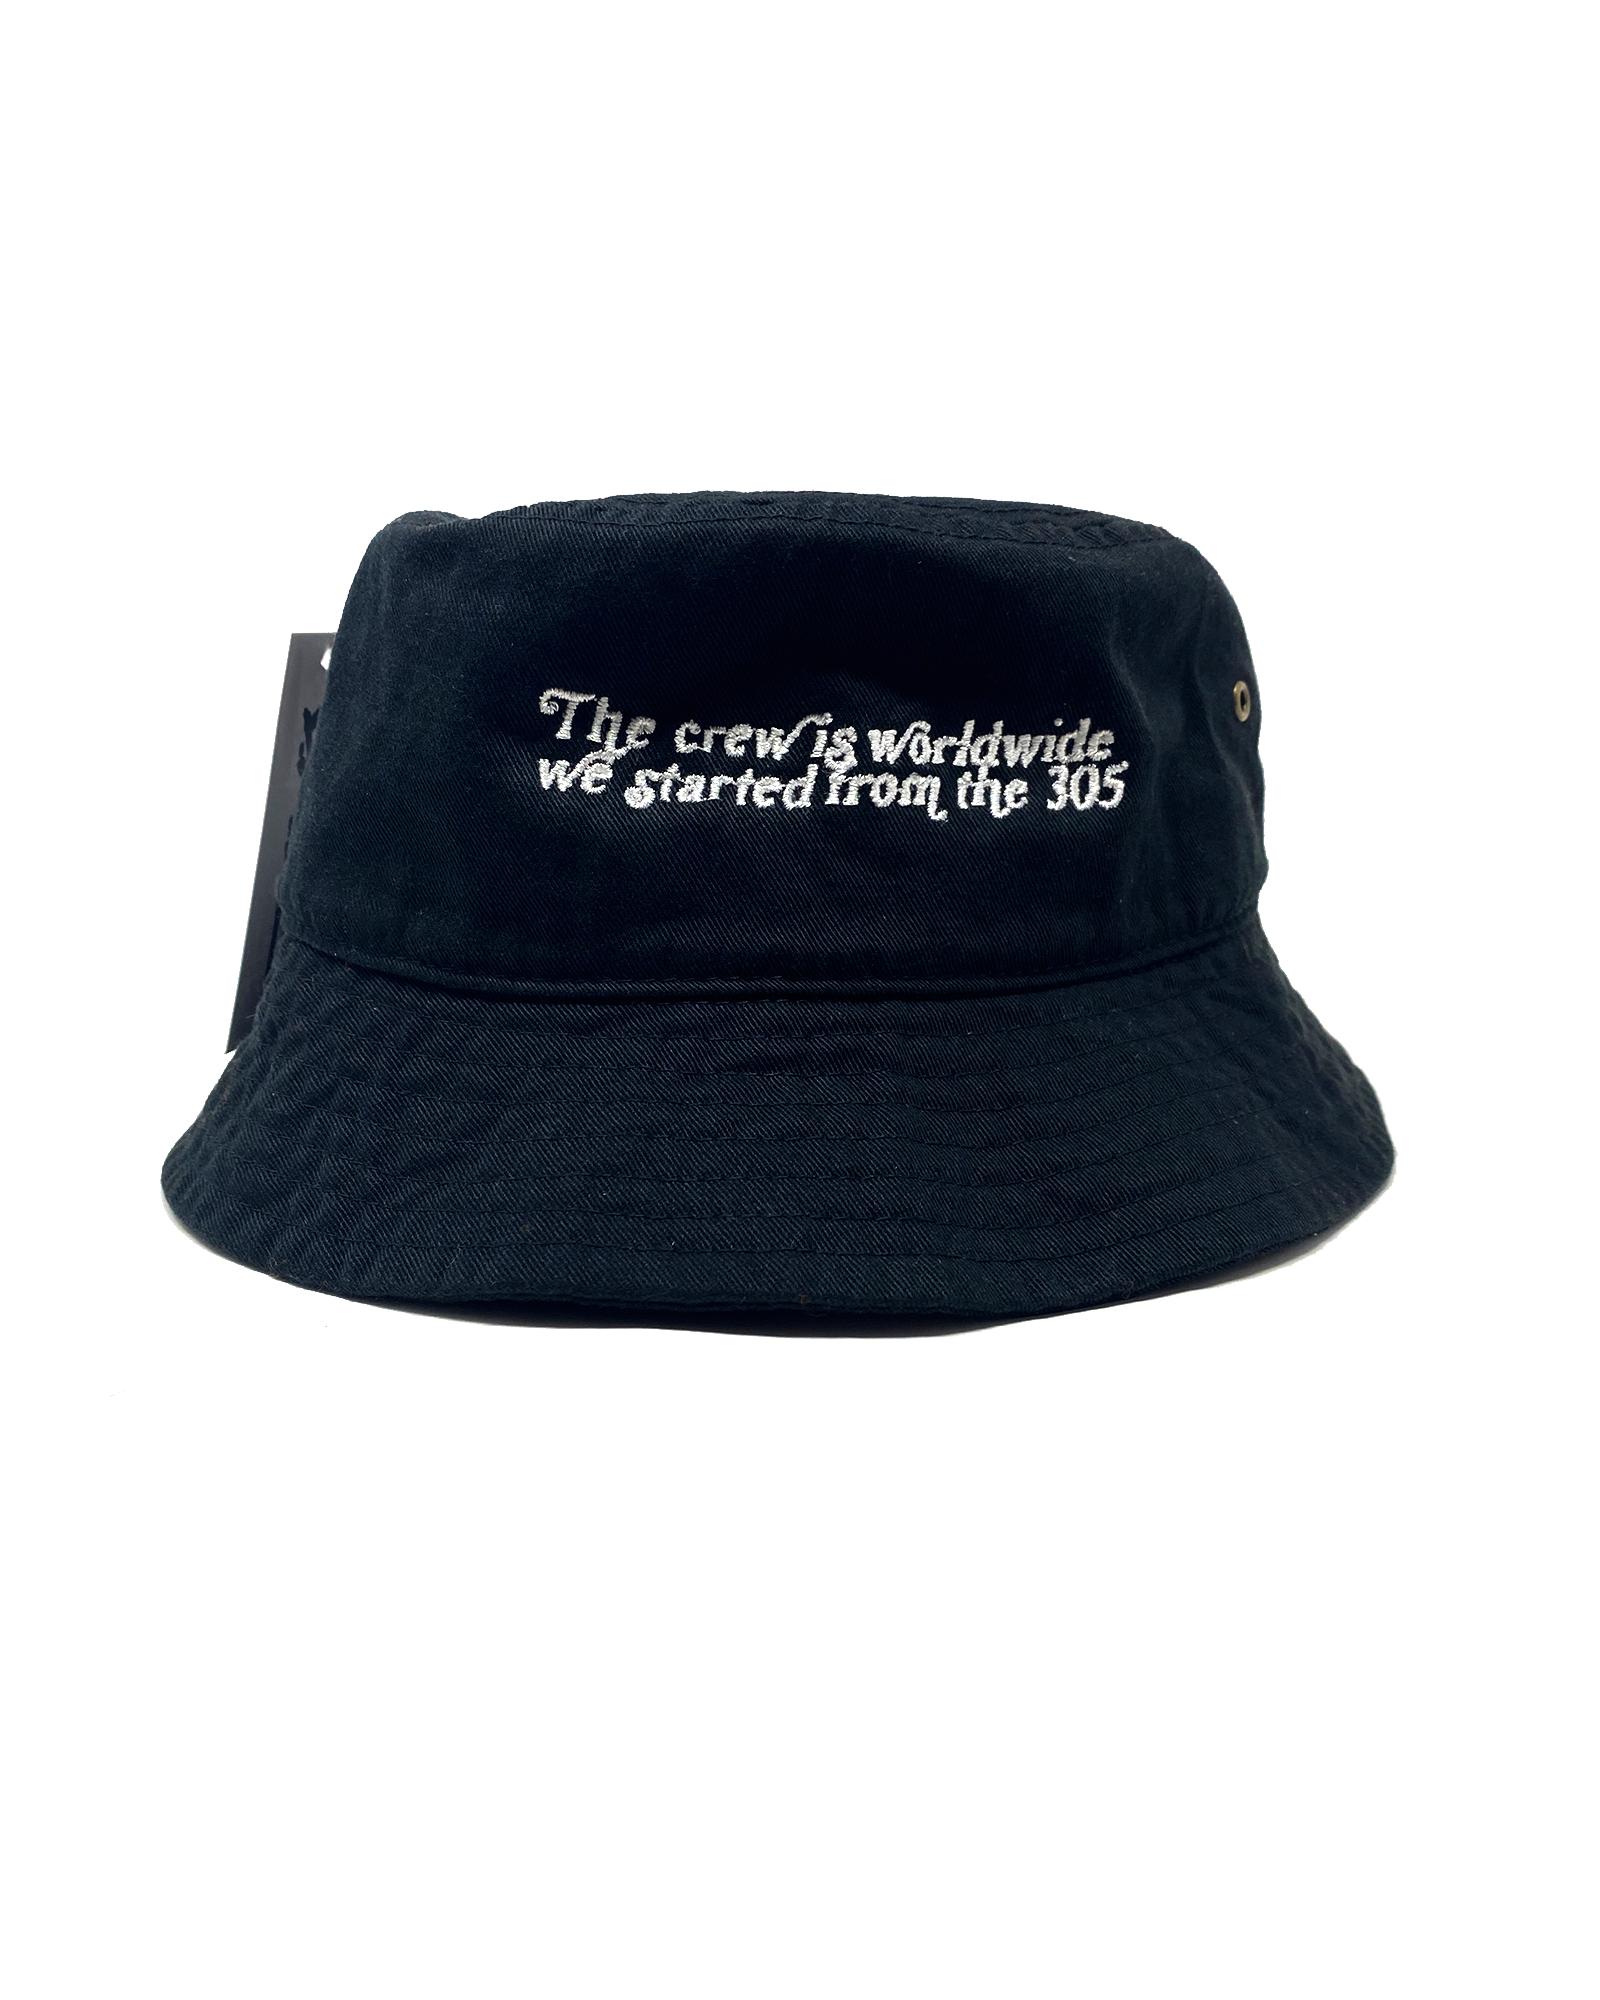 DADE Worldwide Bucket – Hat